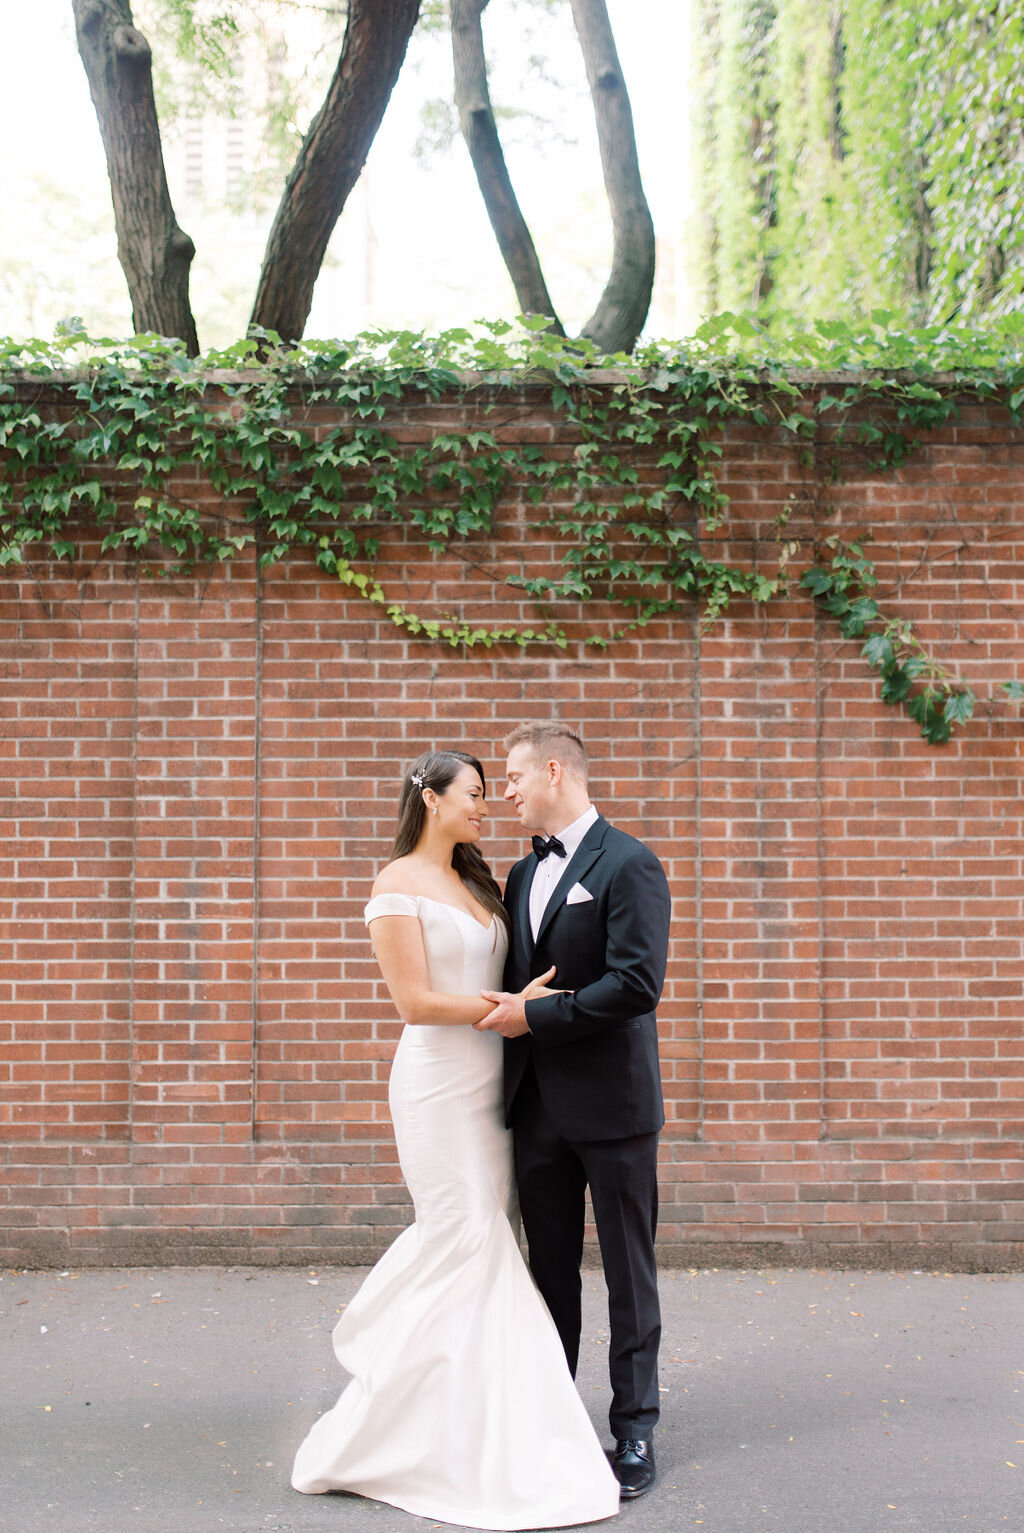 Nastaha & Kelly La Maquette Wedding Photography14.jpg